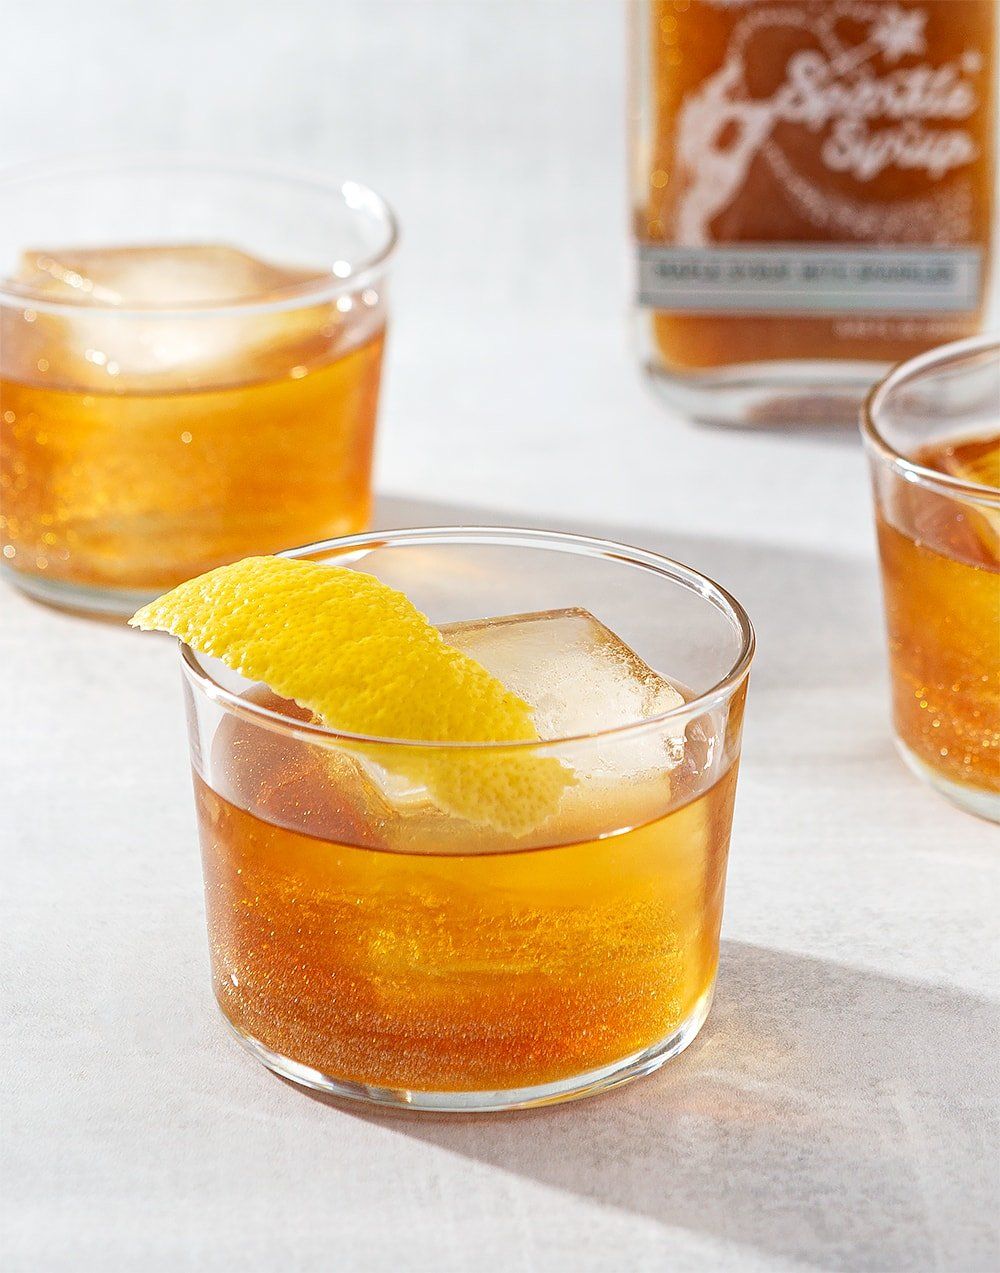 Runamok Maple Sparkle Syrup® (250ml)